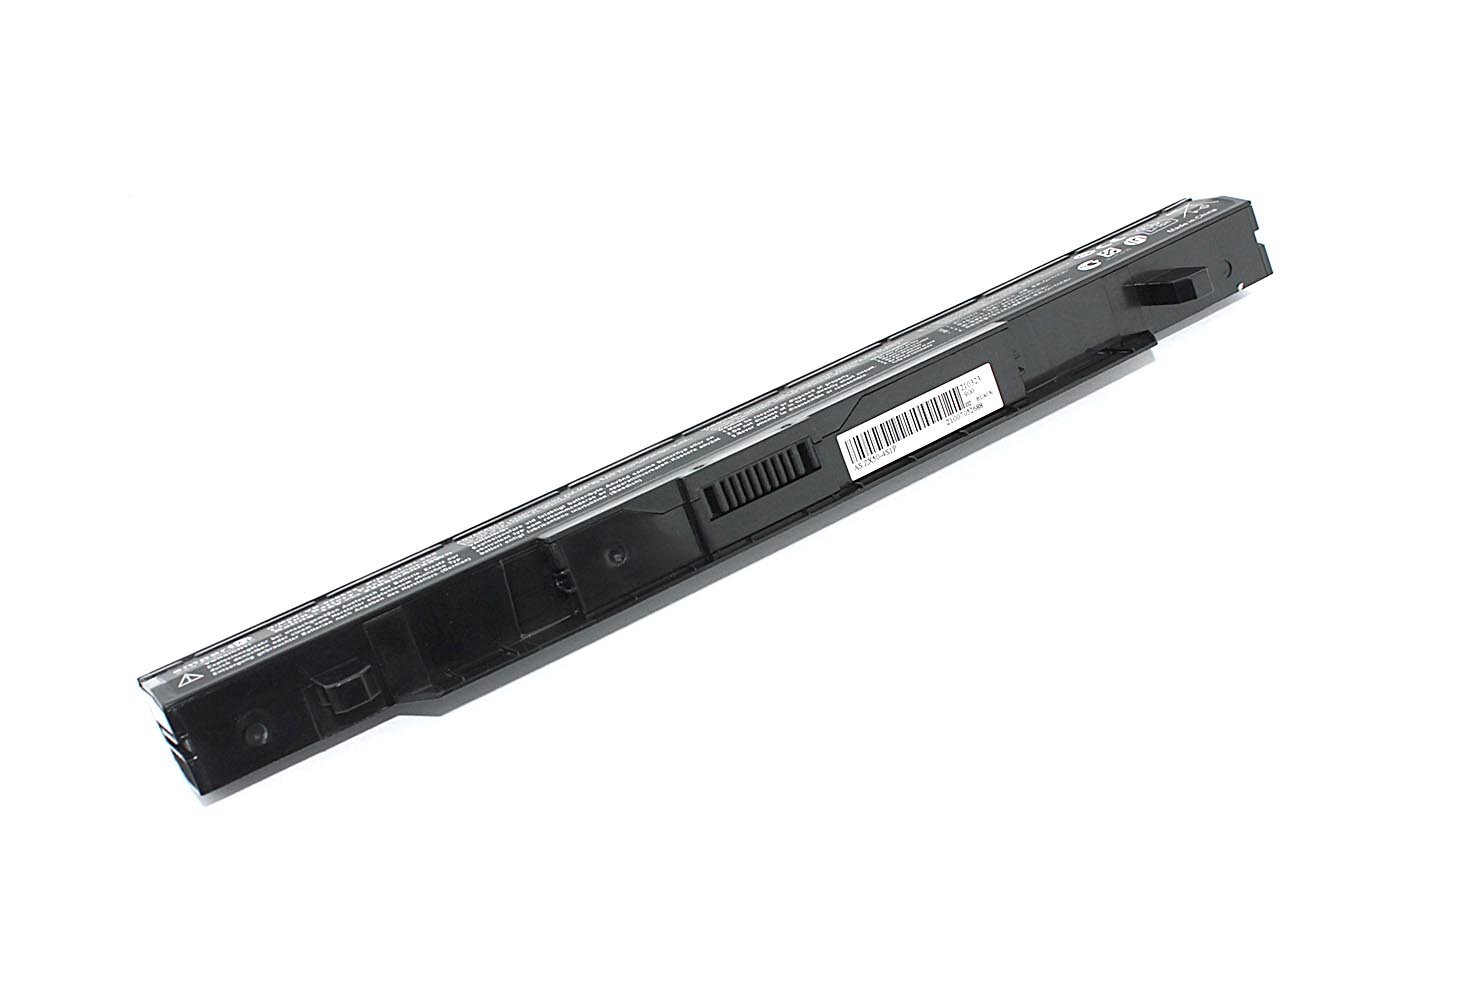 Аккумуляторная батарея Amperin для ноутбука Asus GL552VW (A41N1424) 15V 2200mAh AI-GL552